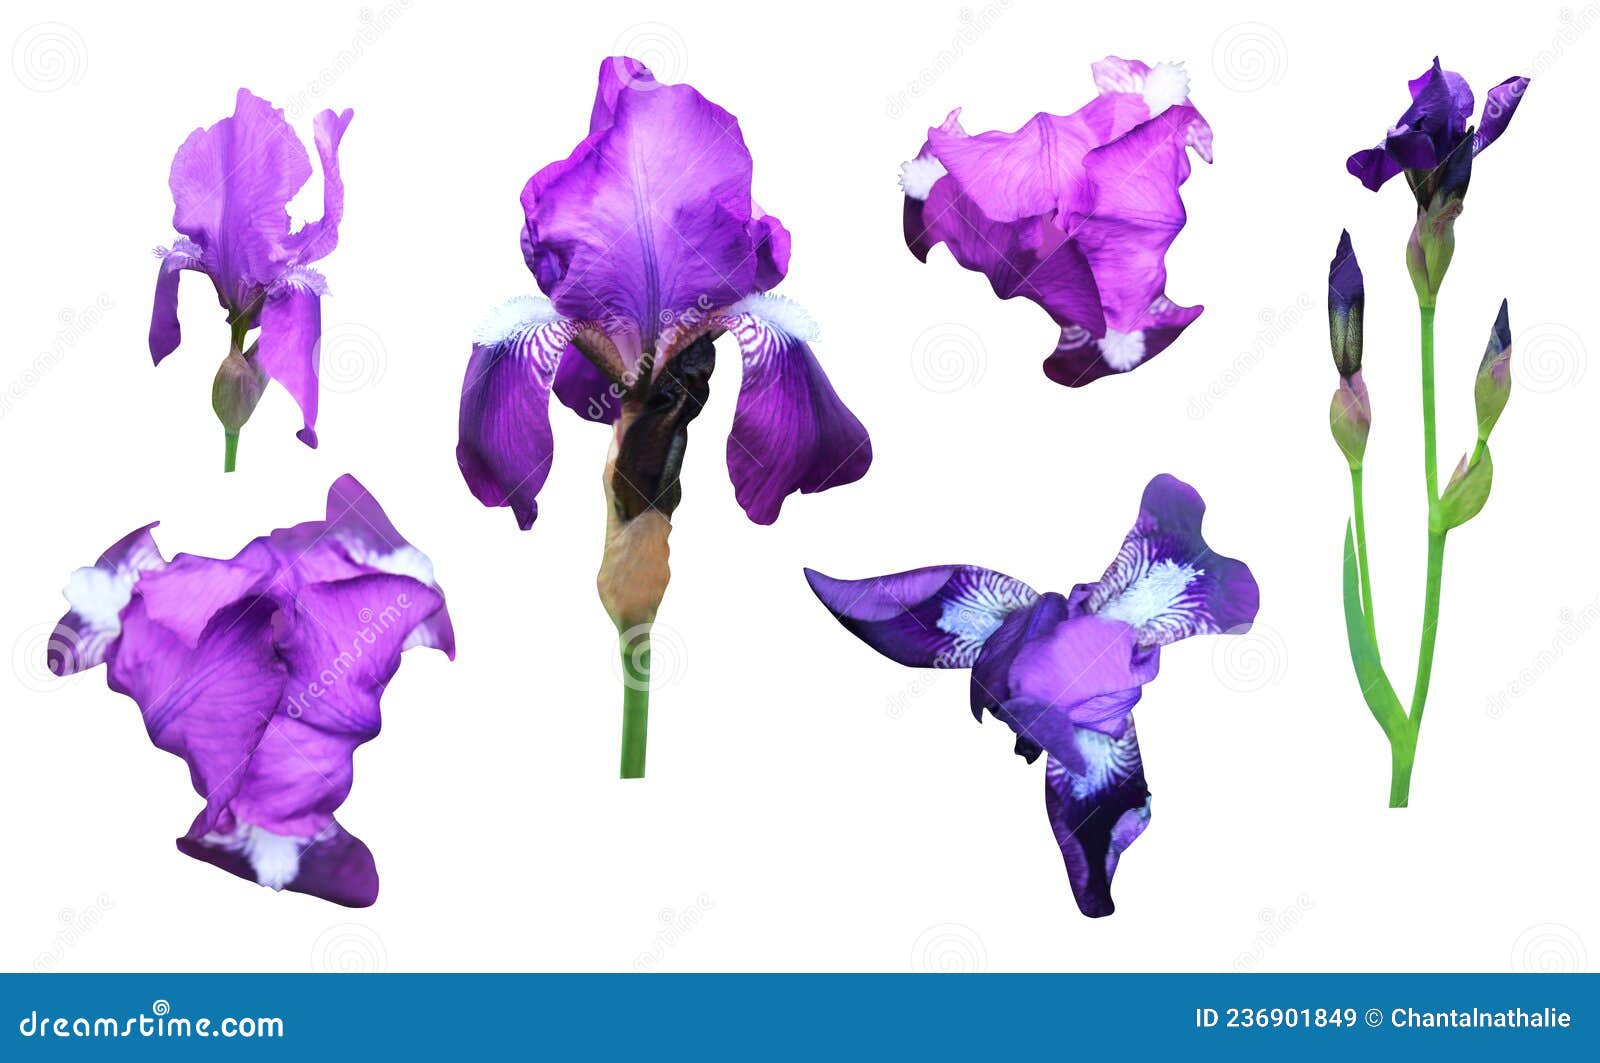 Iris Flower Clip Art Photos   Free & Royalty Free Stock Photos ...